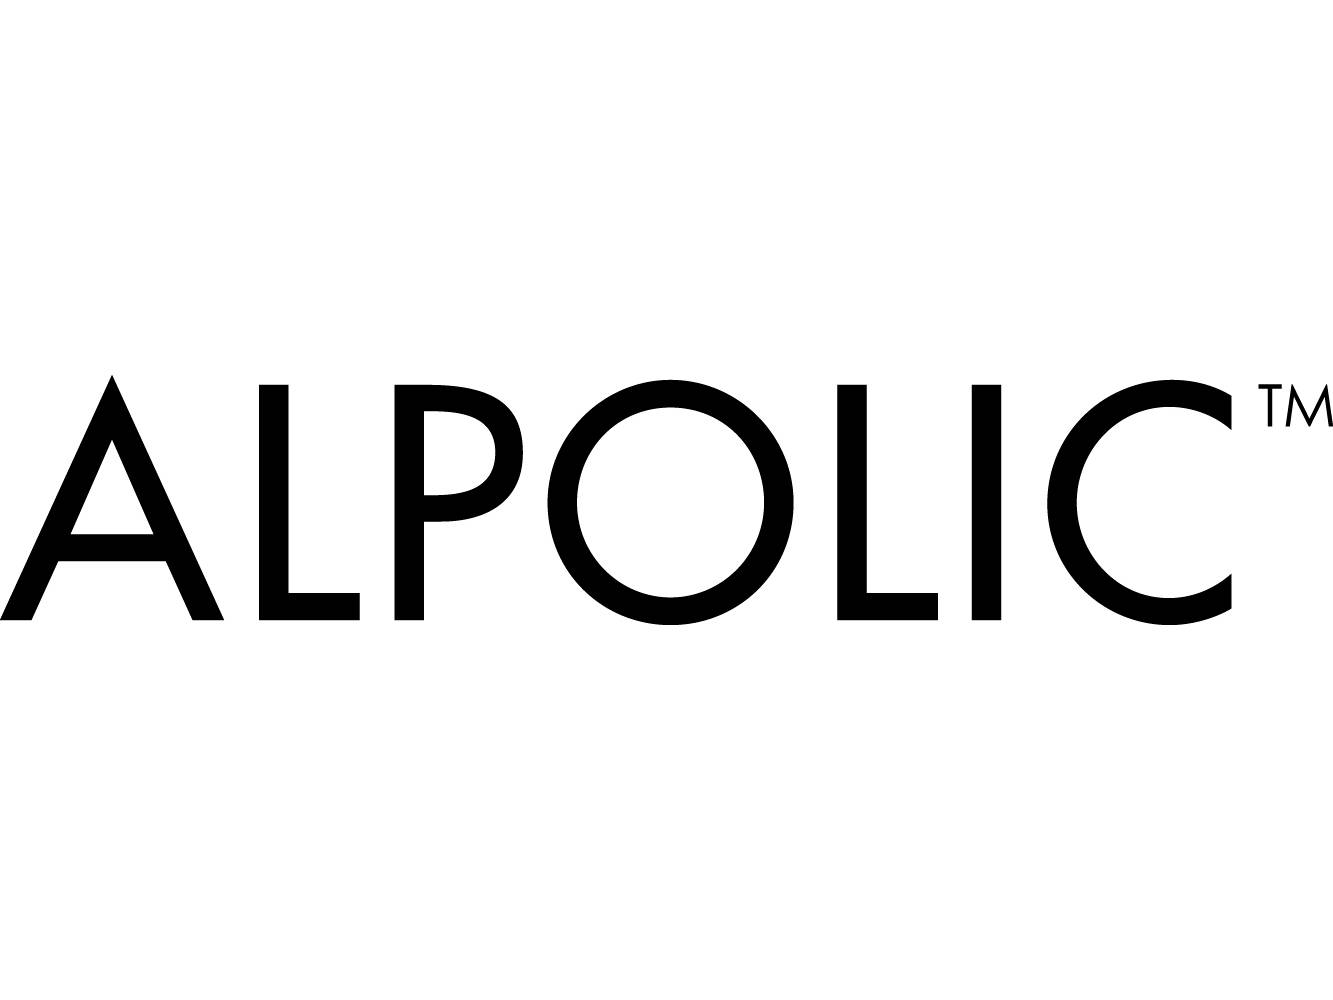 ALPOLIC - Mitsubishi Polyester Film GmbH